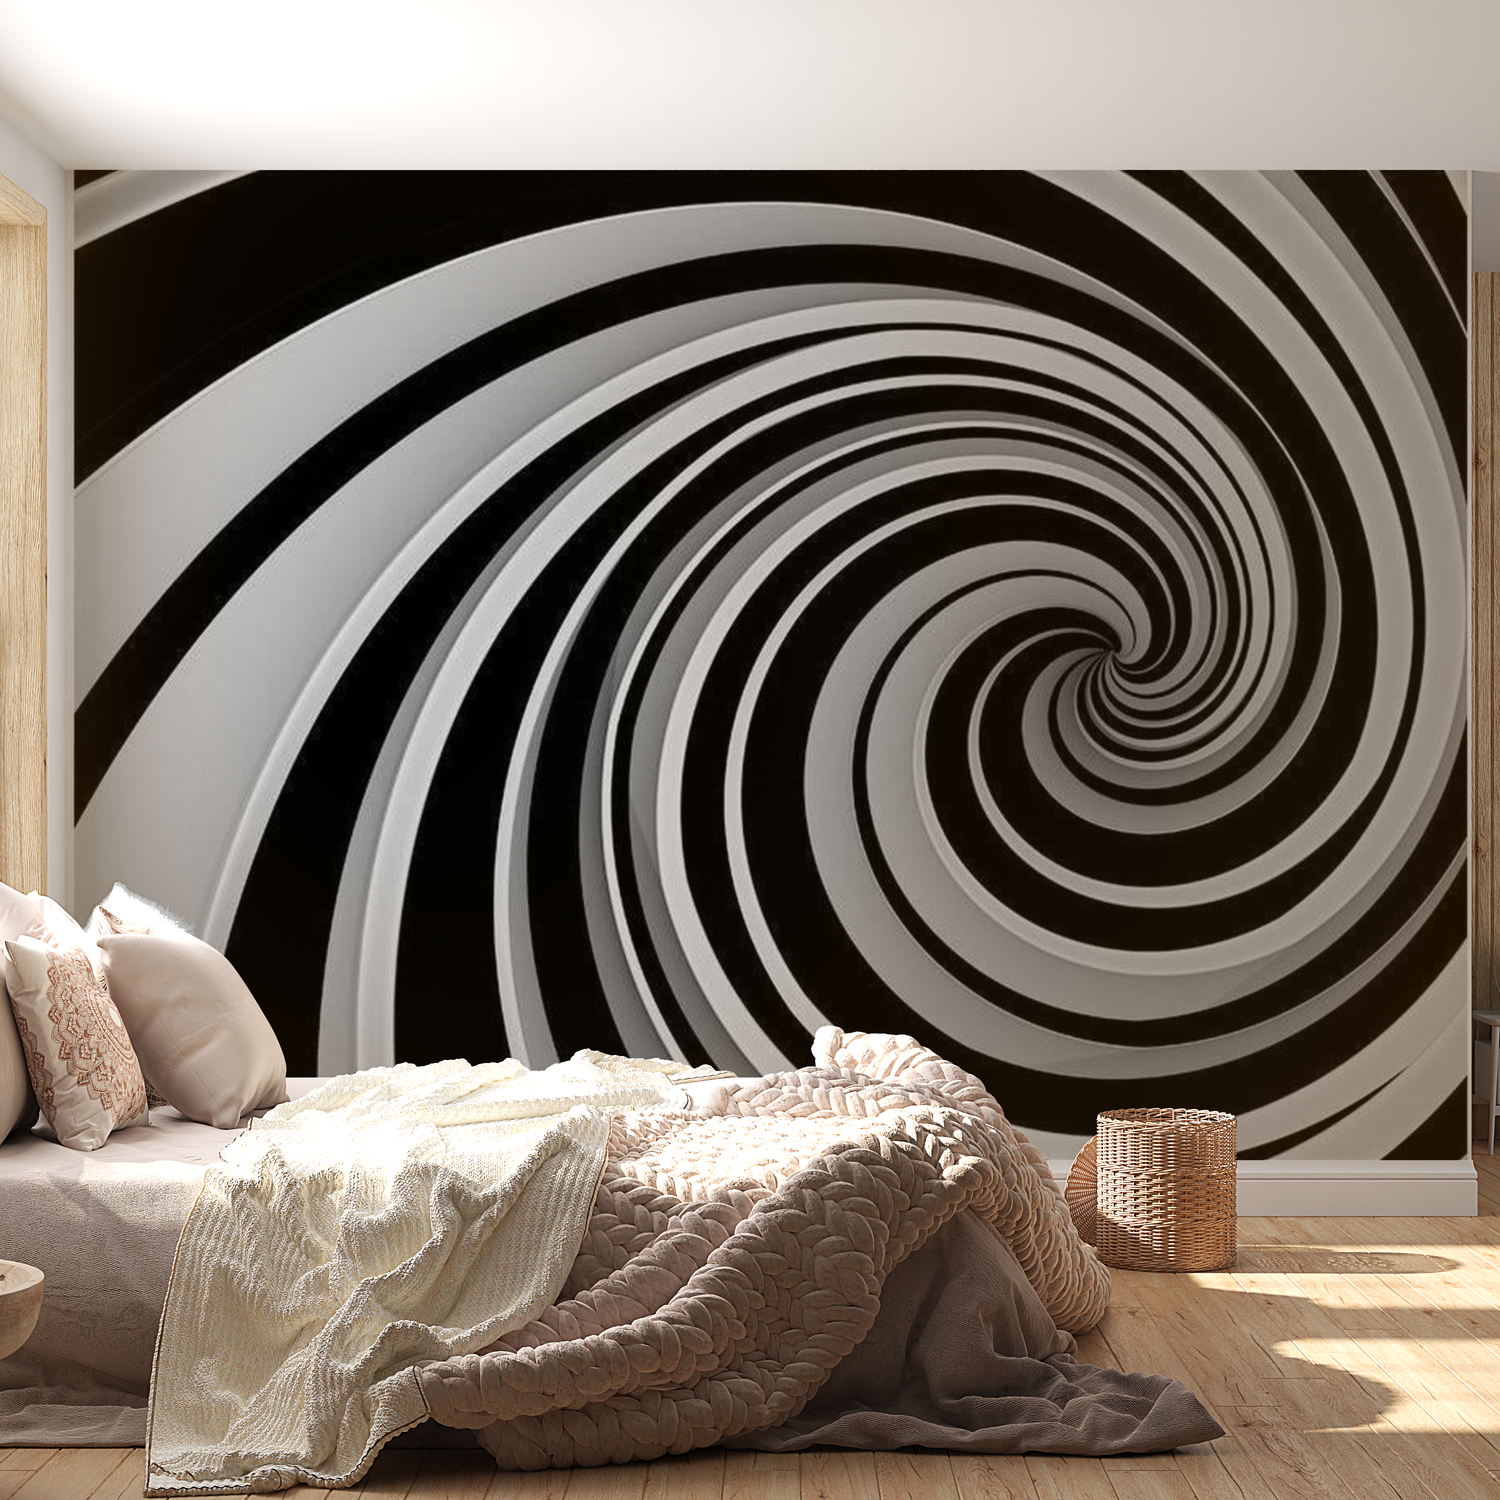 3D Illusion Wallpaper Wall Mural - Black & White Swirl 118"Wx90"H